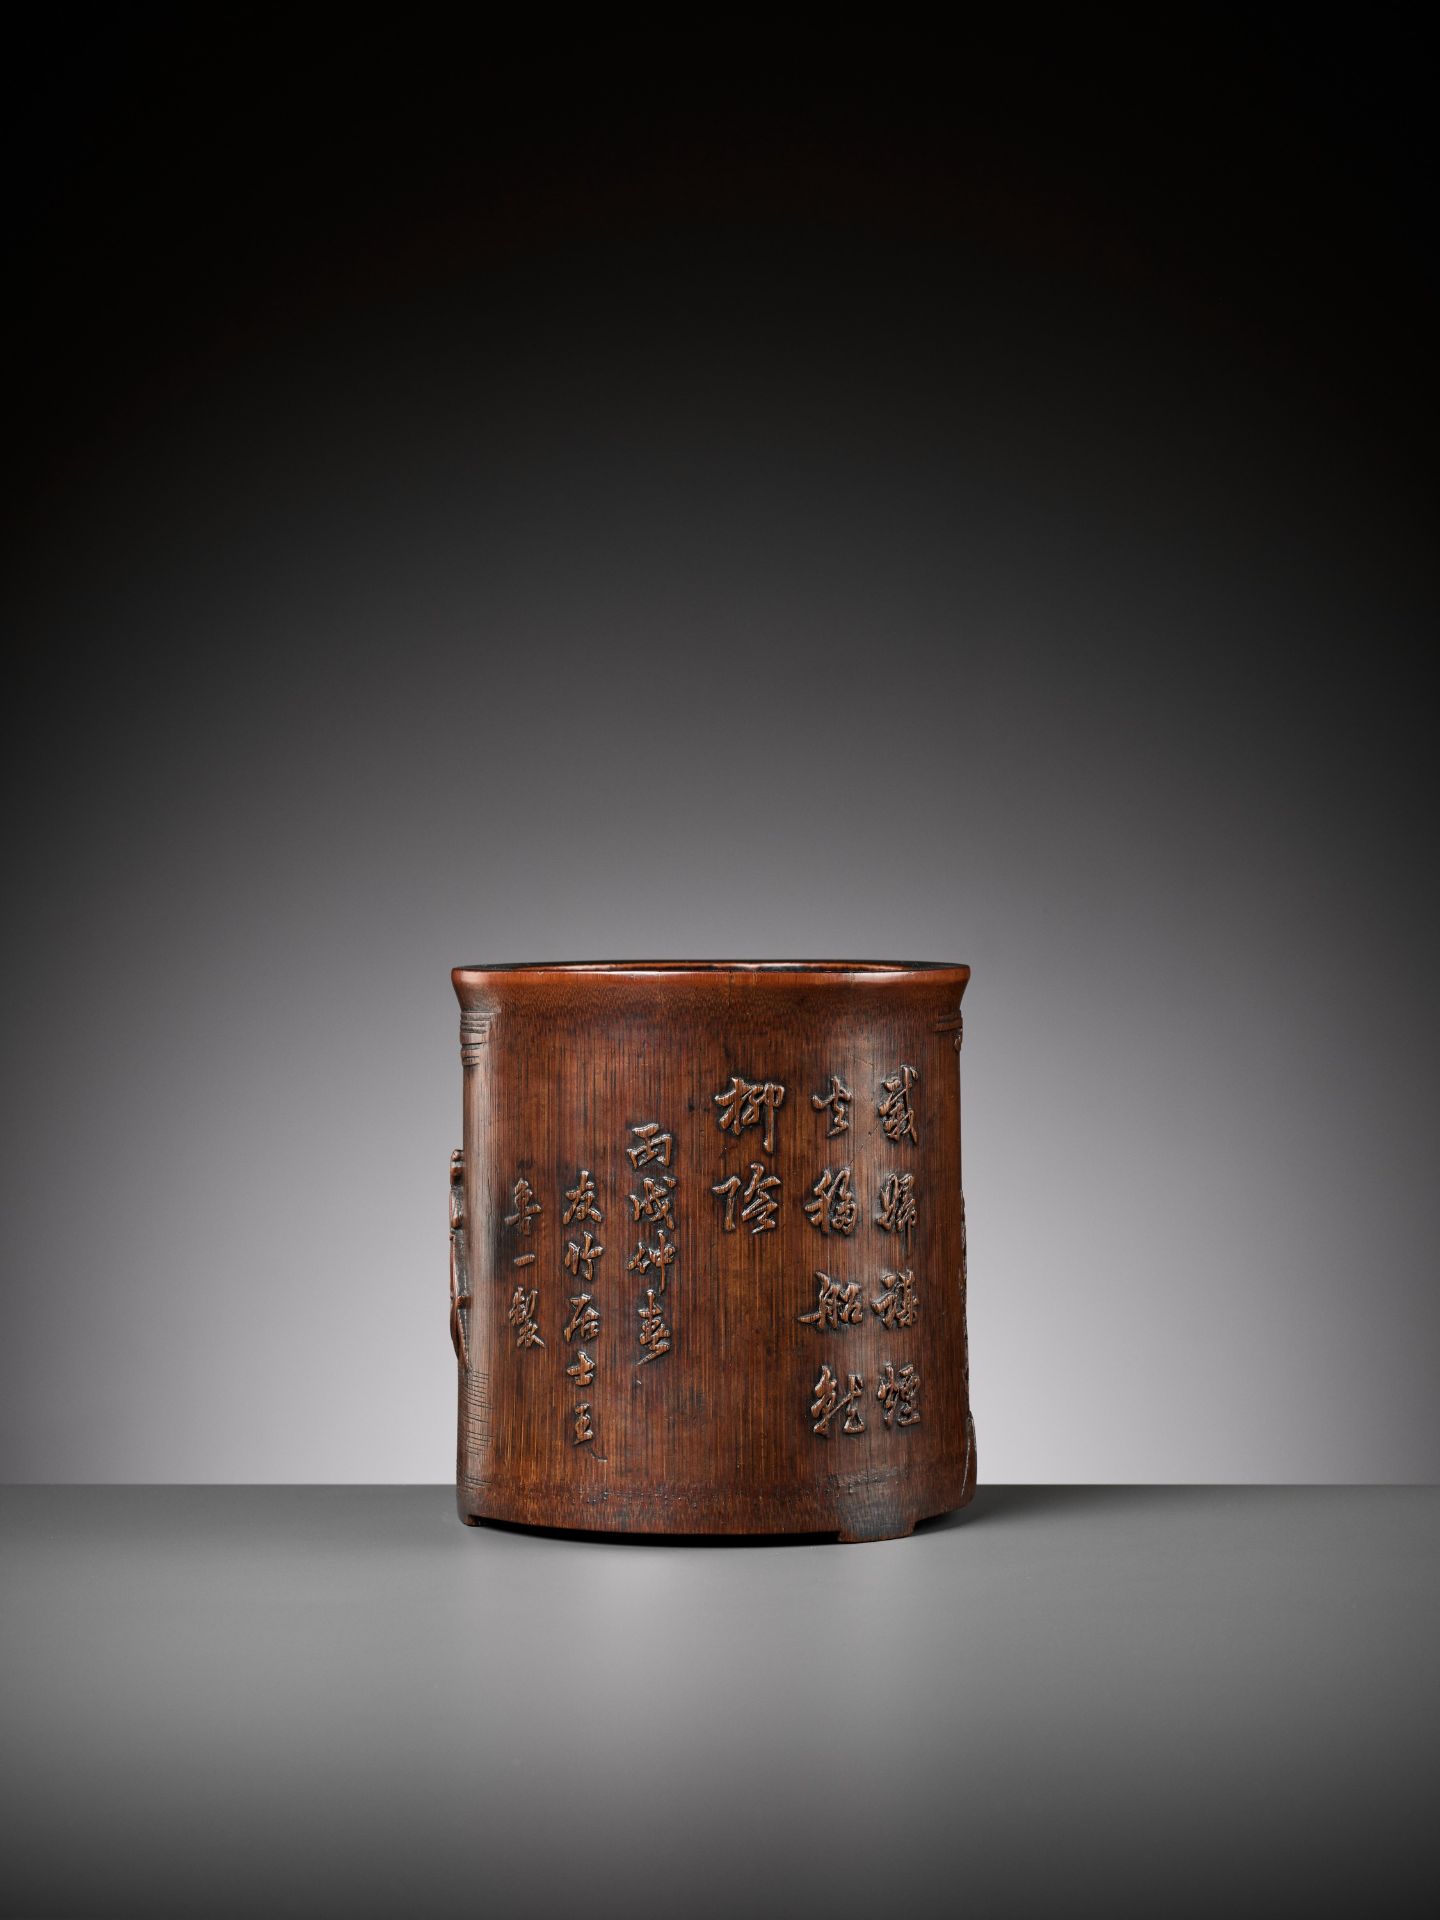 AN INSCRIBED BAMBOO BRUSHPOT, BITONG, BY WANG LUYI, 18TH CENTURY - Image 6 of 22